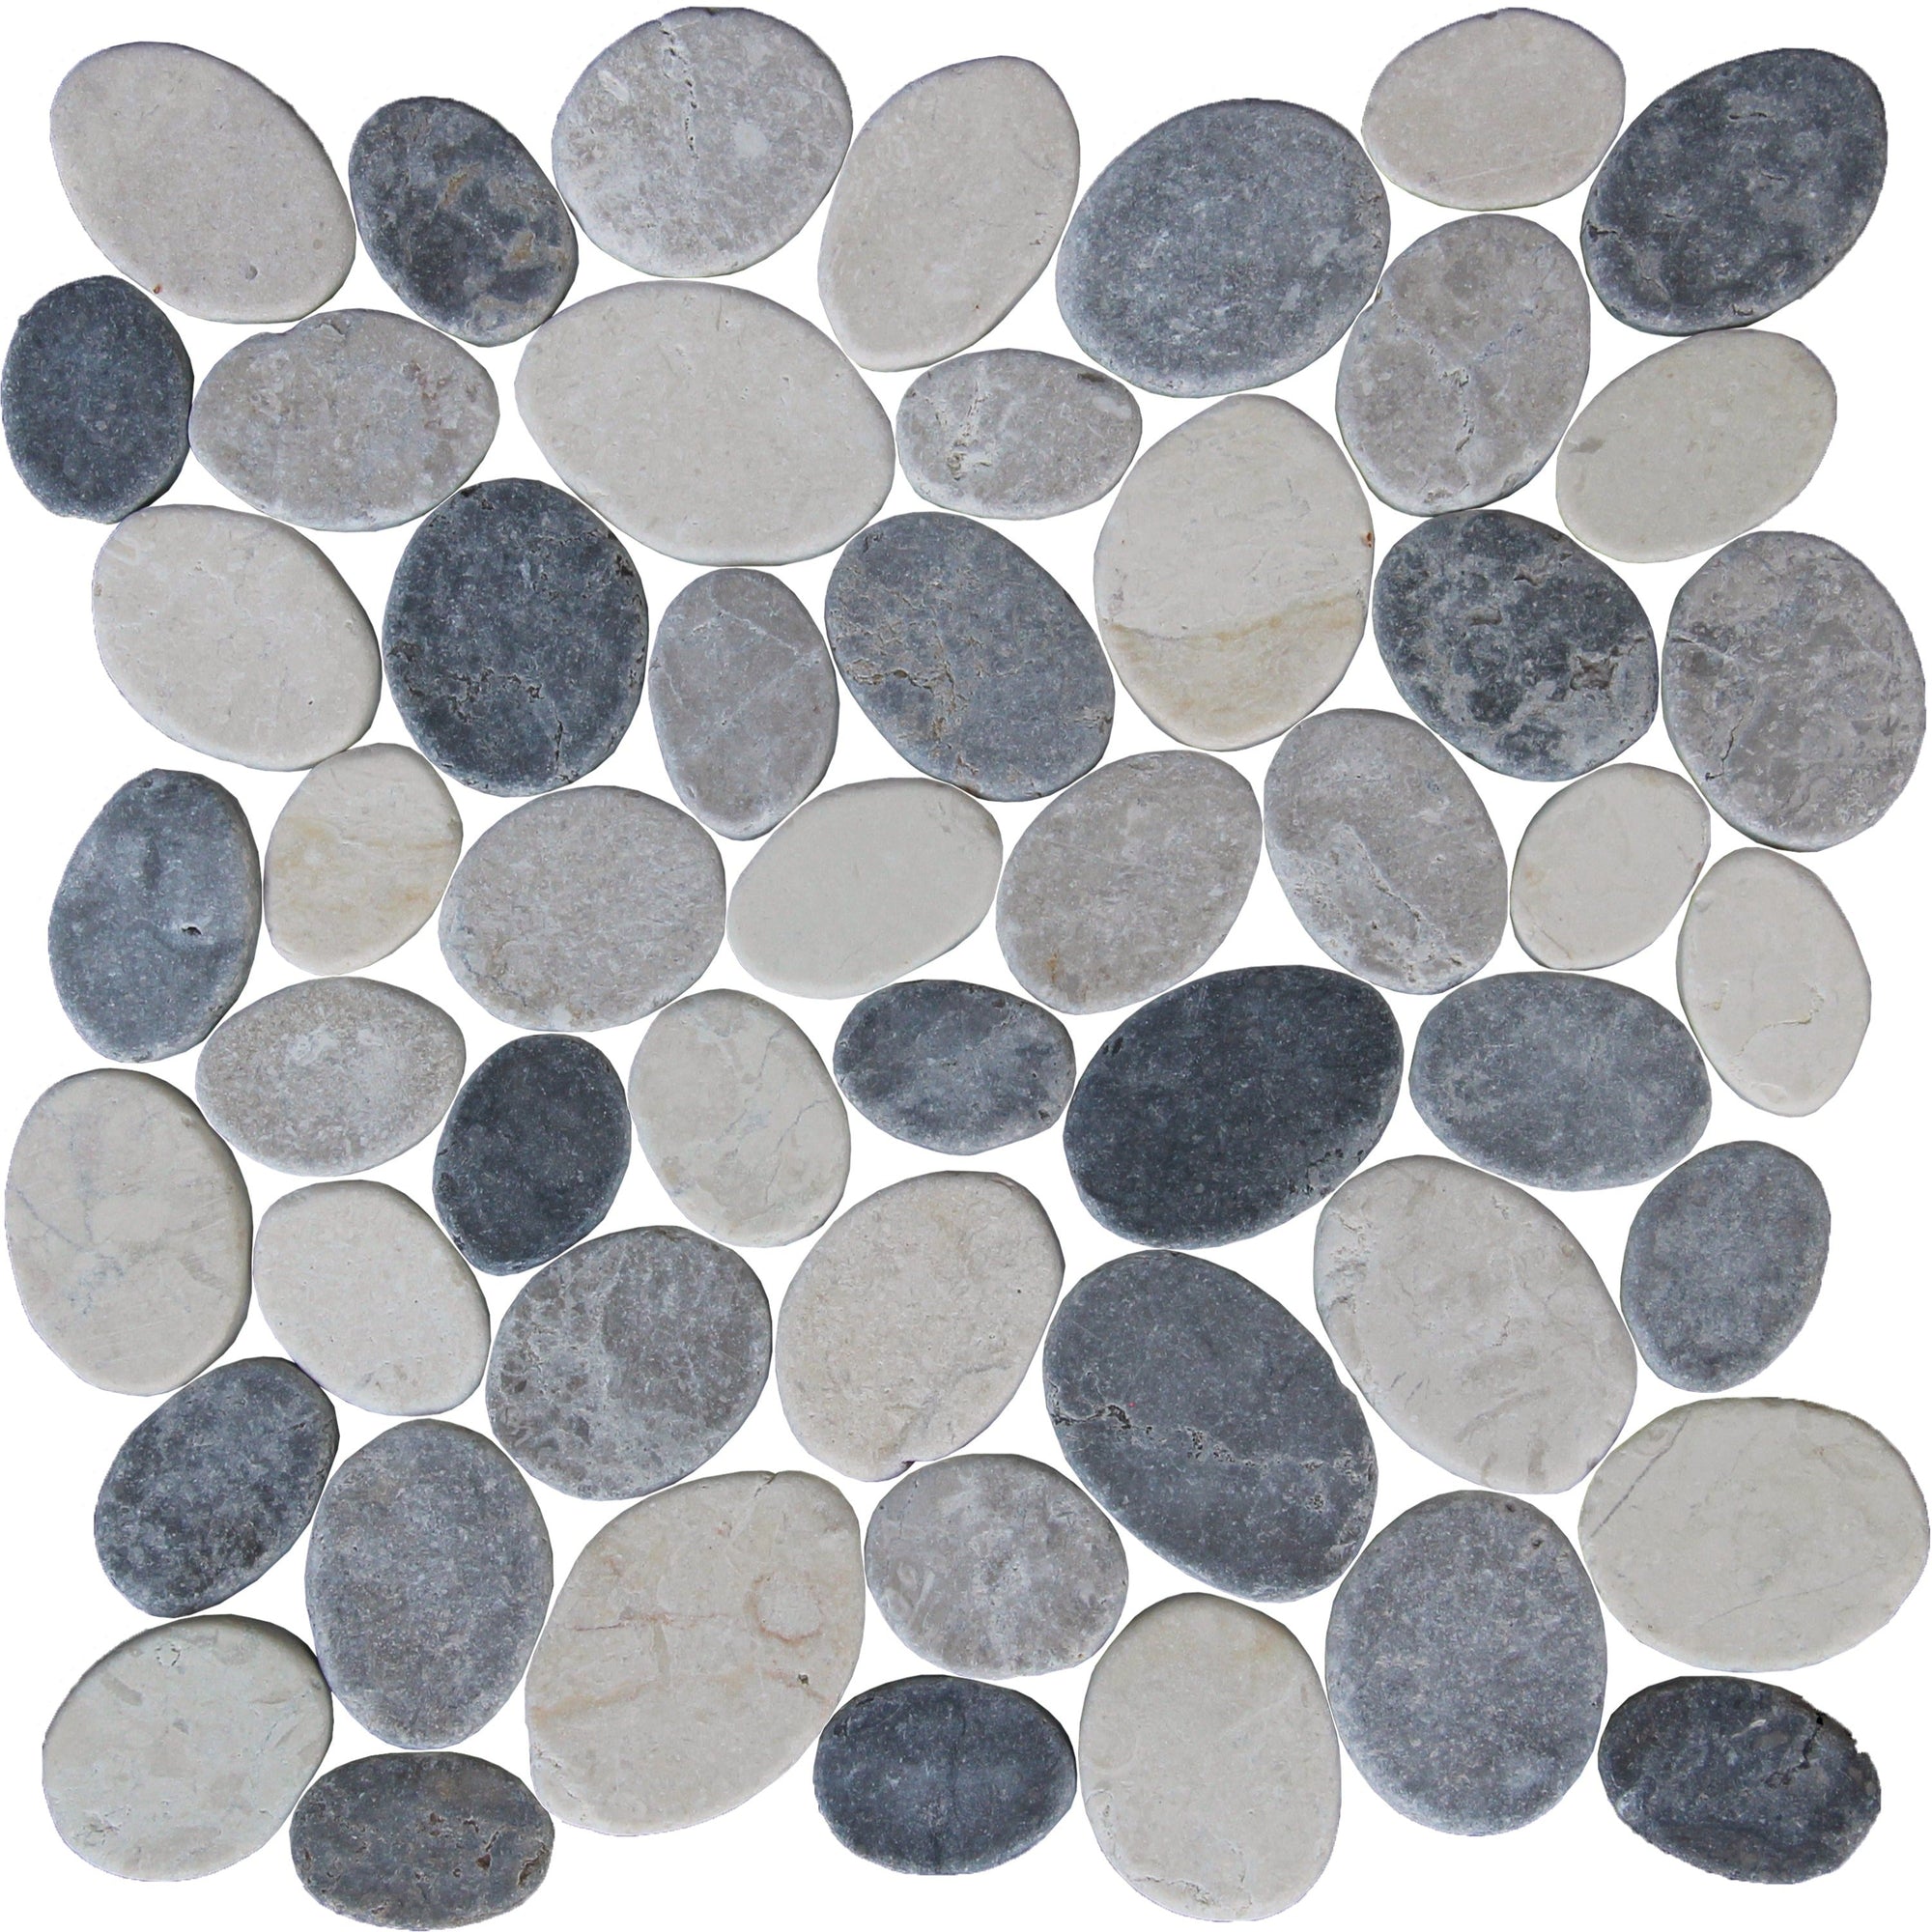 Tesoro - Ocean Stones Collection - Coin Pebble Mosaic - Light Grey, Dark Grey, and White